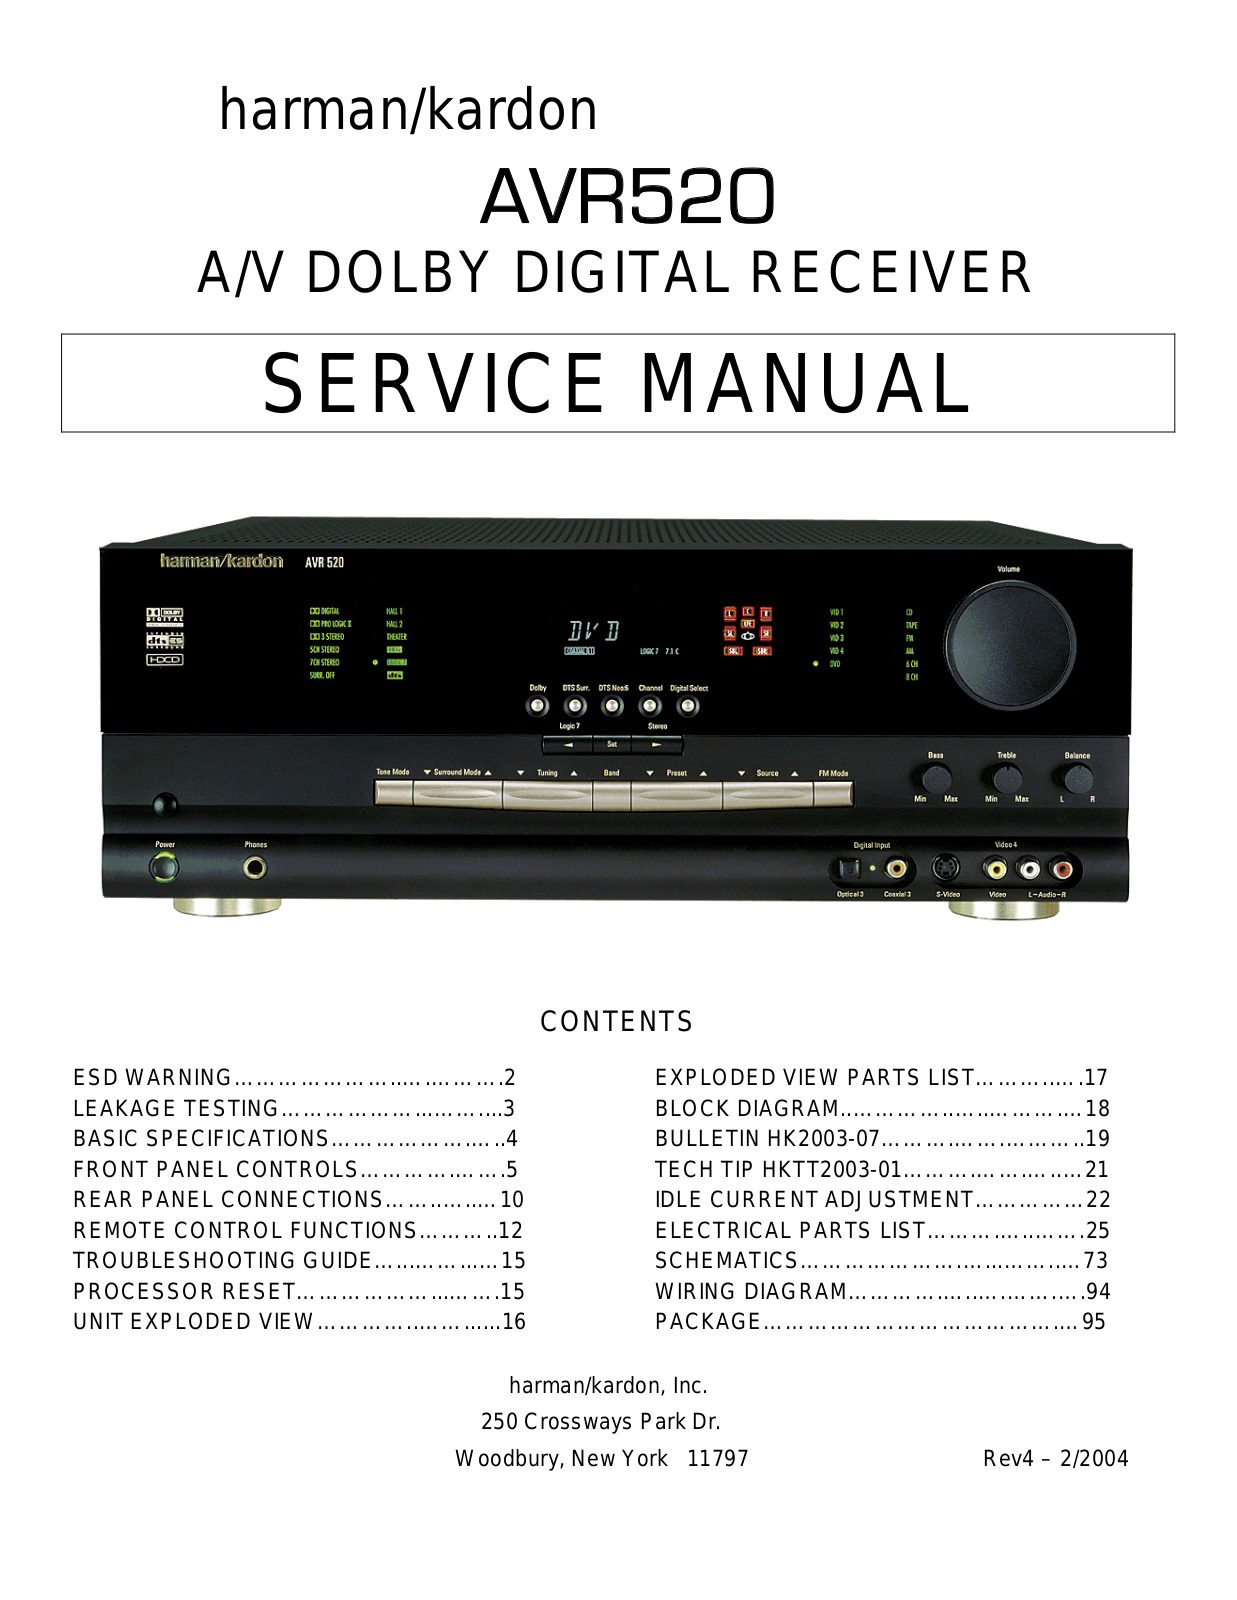 Harman Kardon AVR-520 Service manual